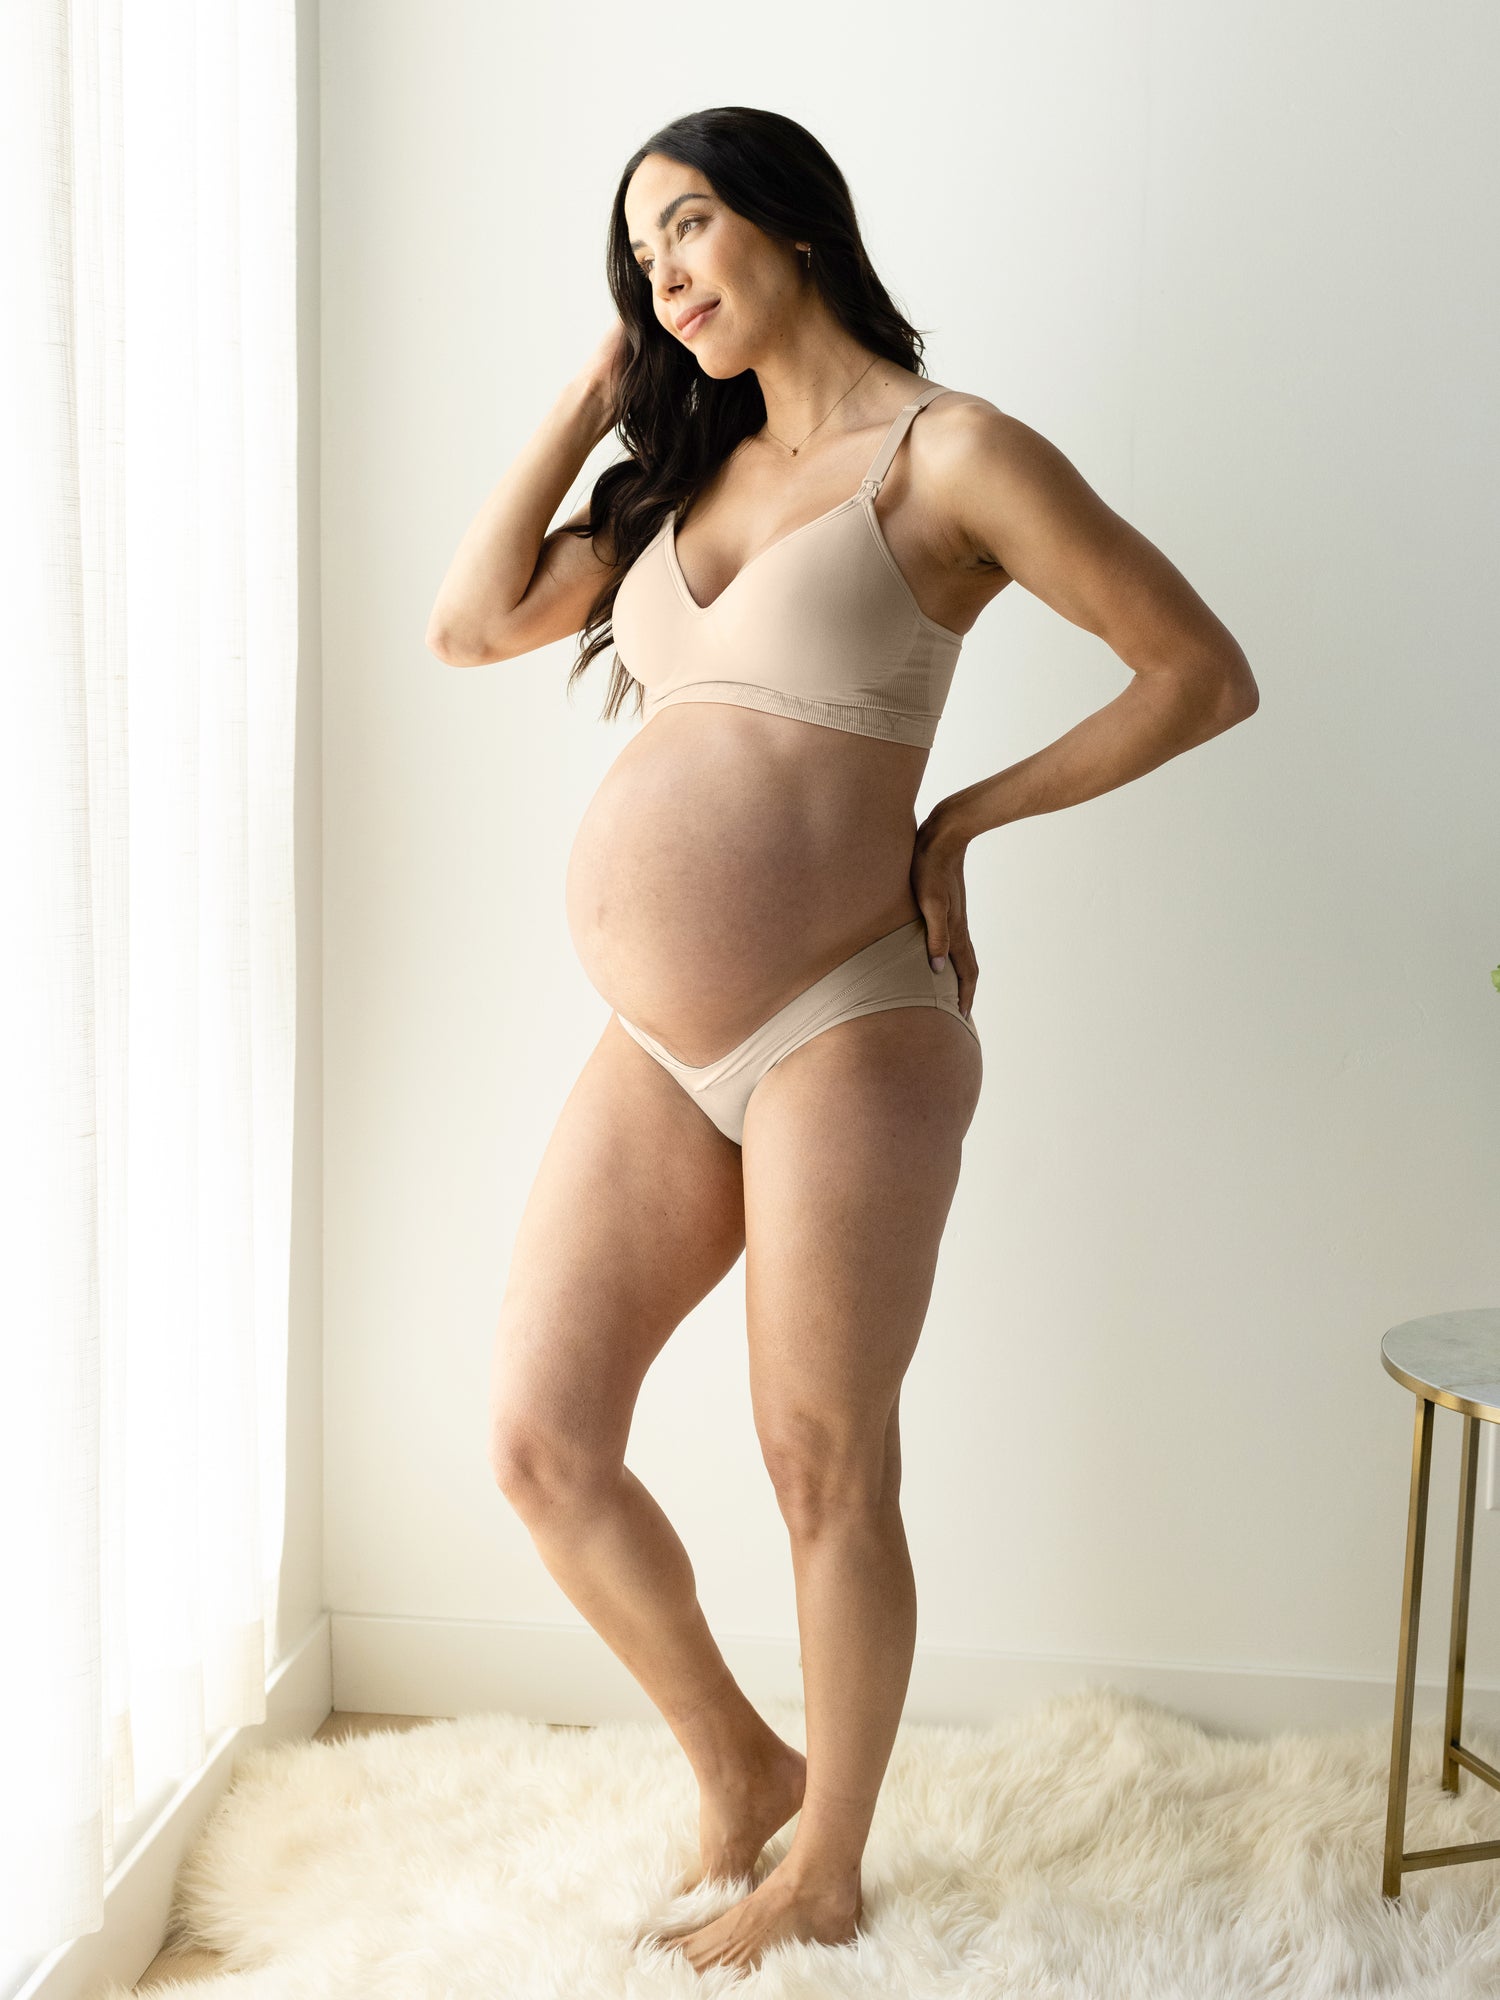 Mums & Bumps - High Waisted Postpartum Panty - Beige